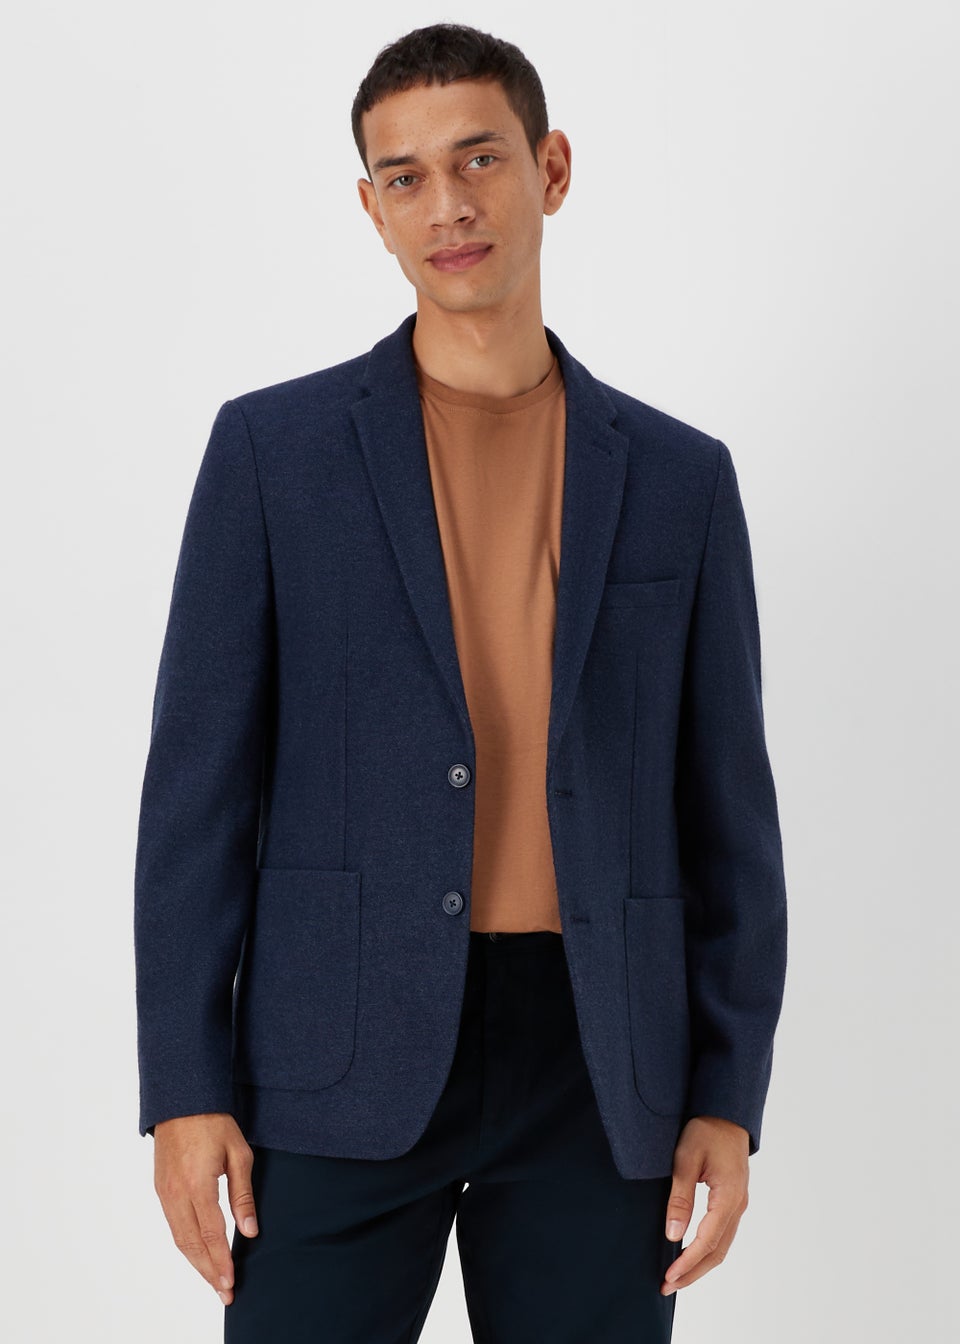 Mens Suit Jackets | Mens Blazers in Blue, Grey, Black - Matalan